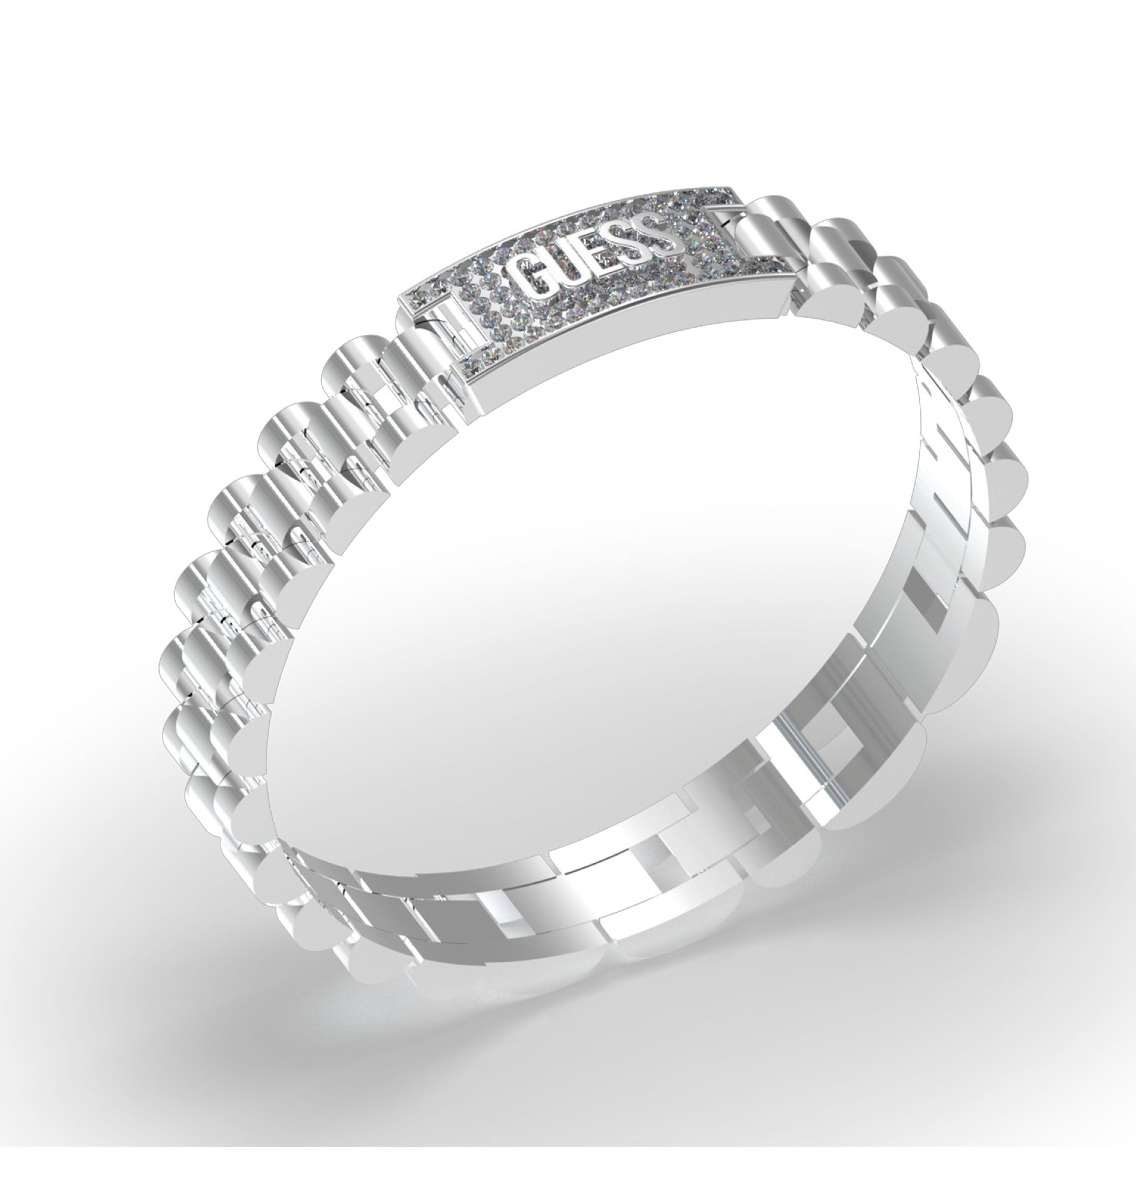 UMB85019 Man's bracelet - Bracelets - GUESS - J...